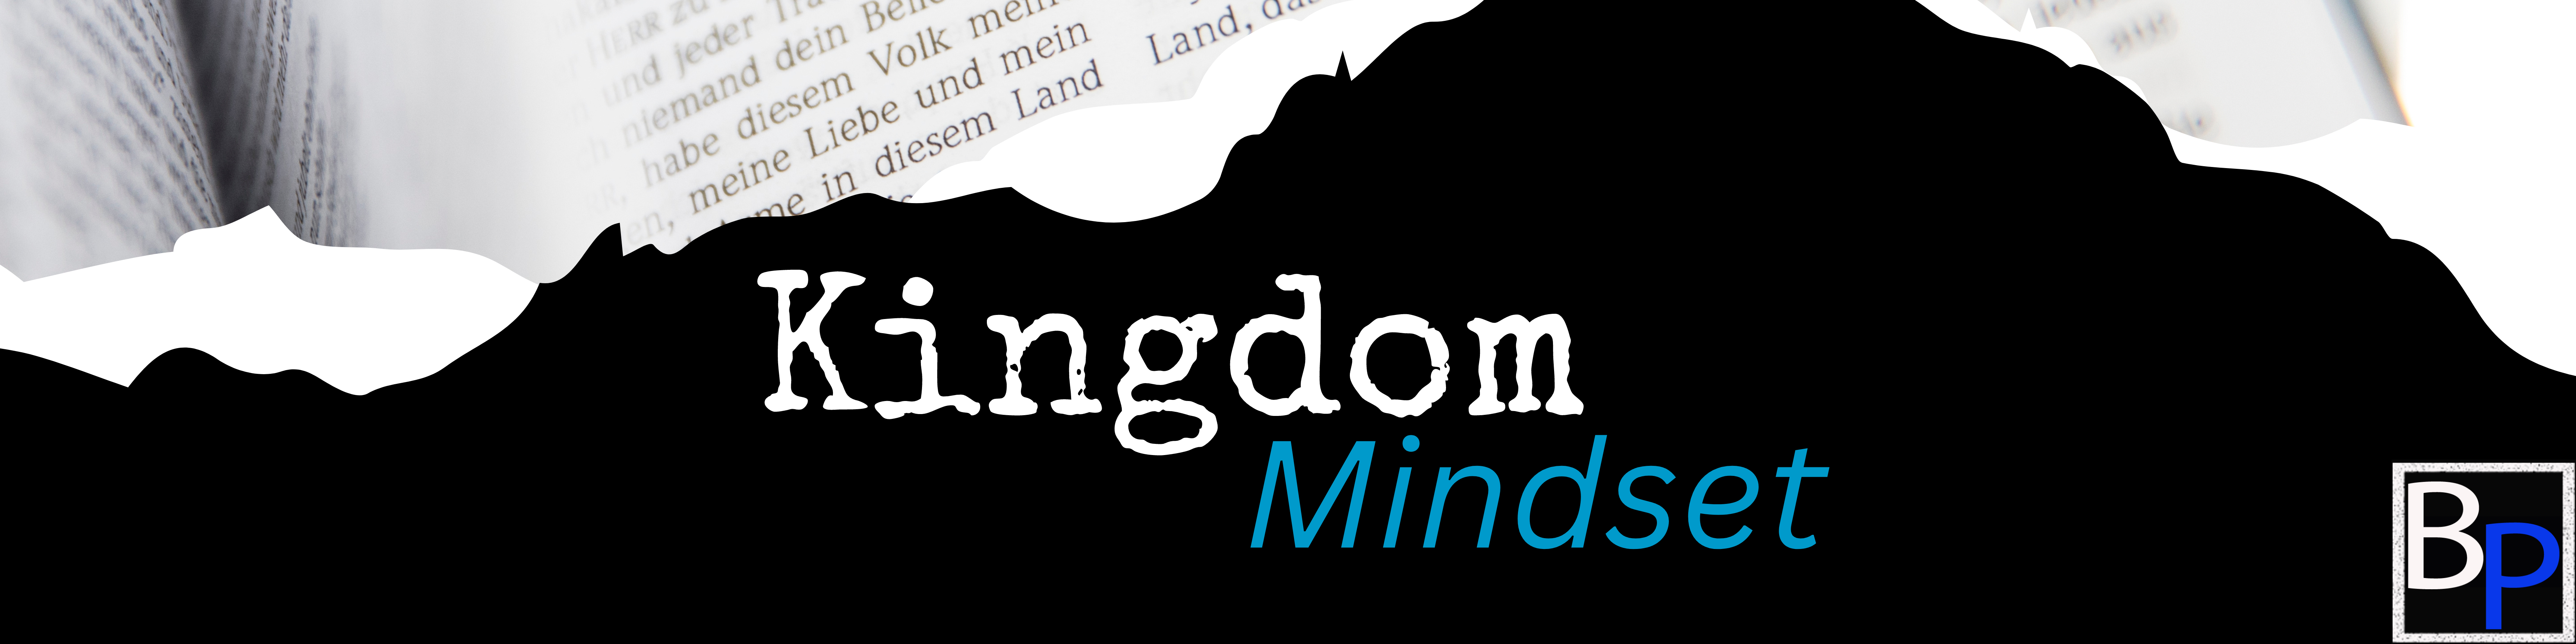 kingdom mindset (72 x 18 in)